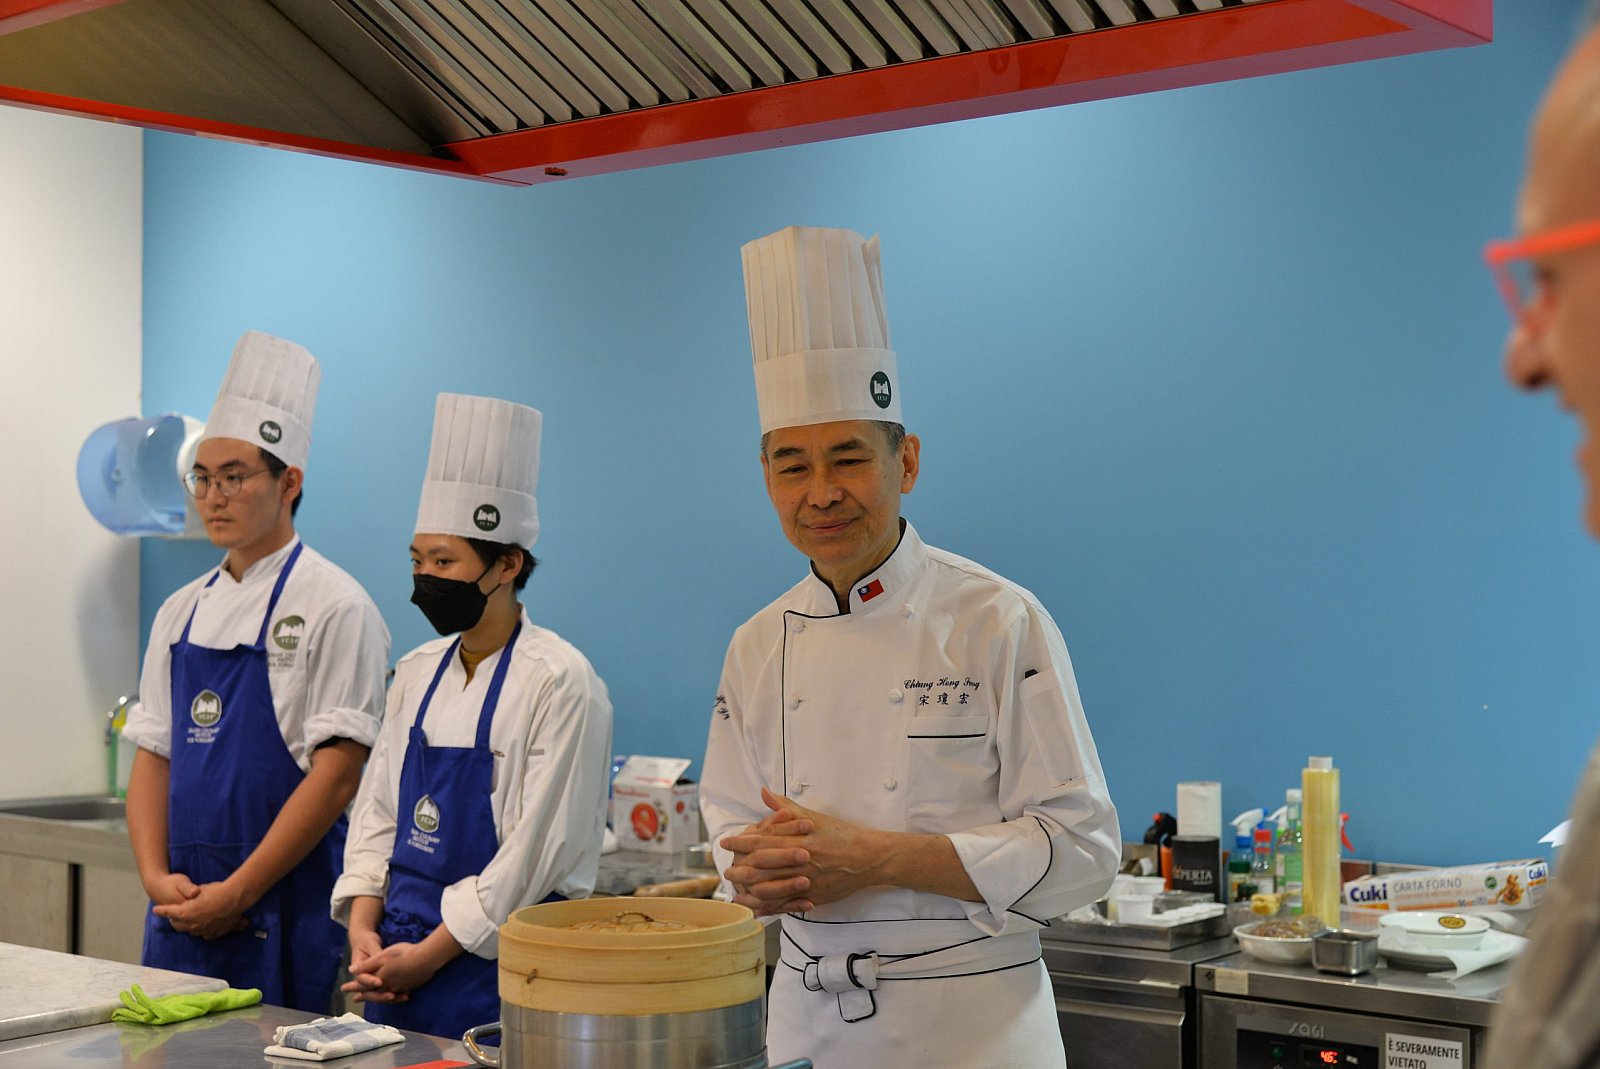 Demo di cucina e pasticceria cinese-taiwanese